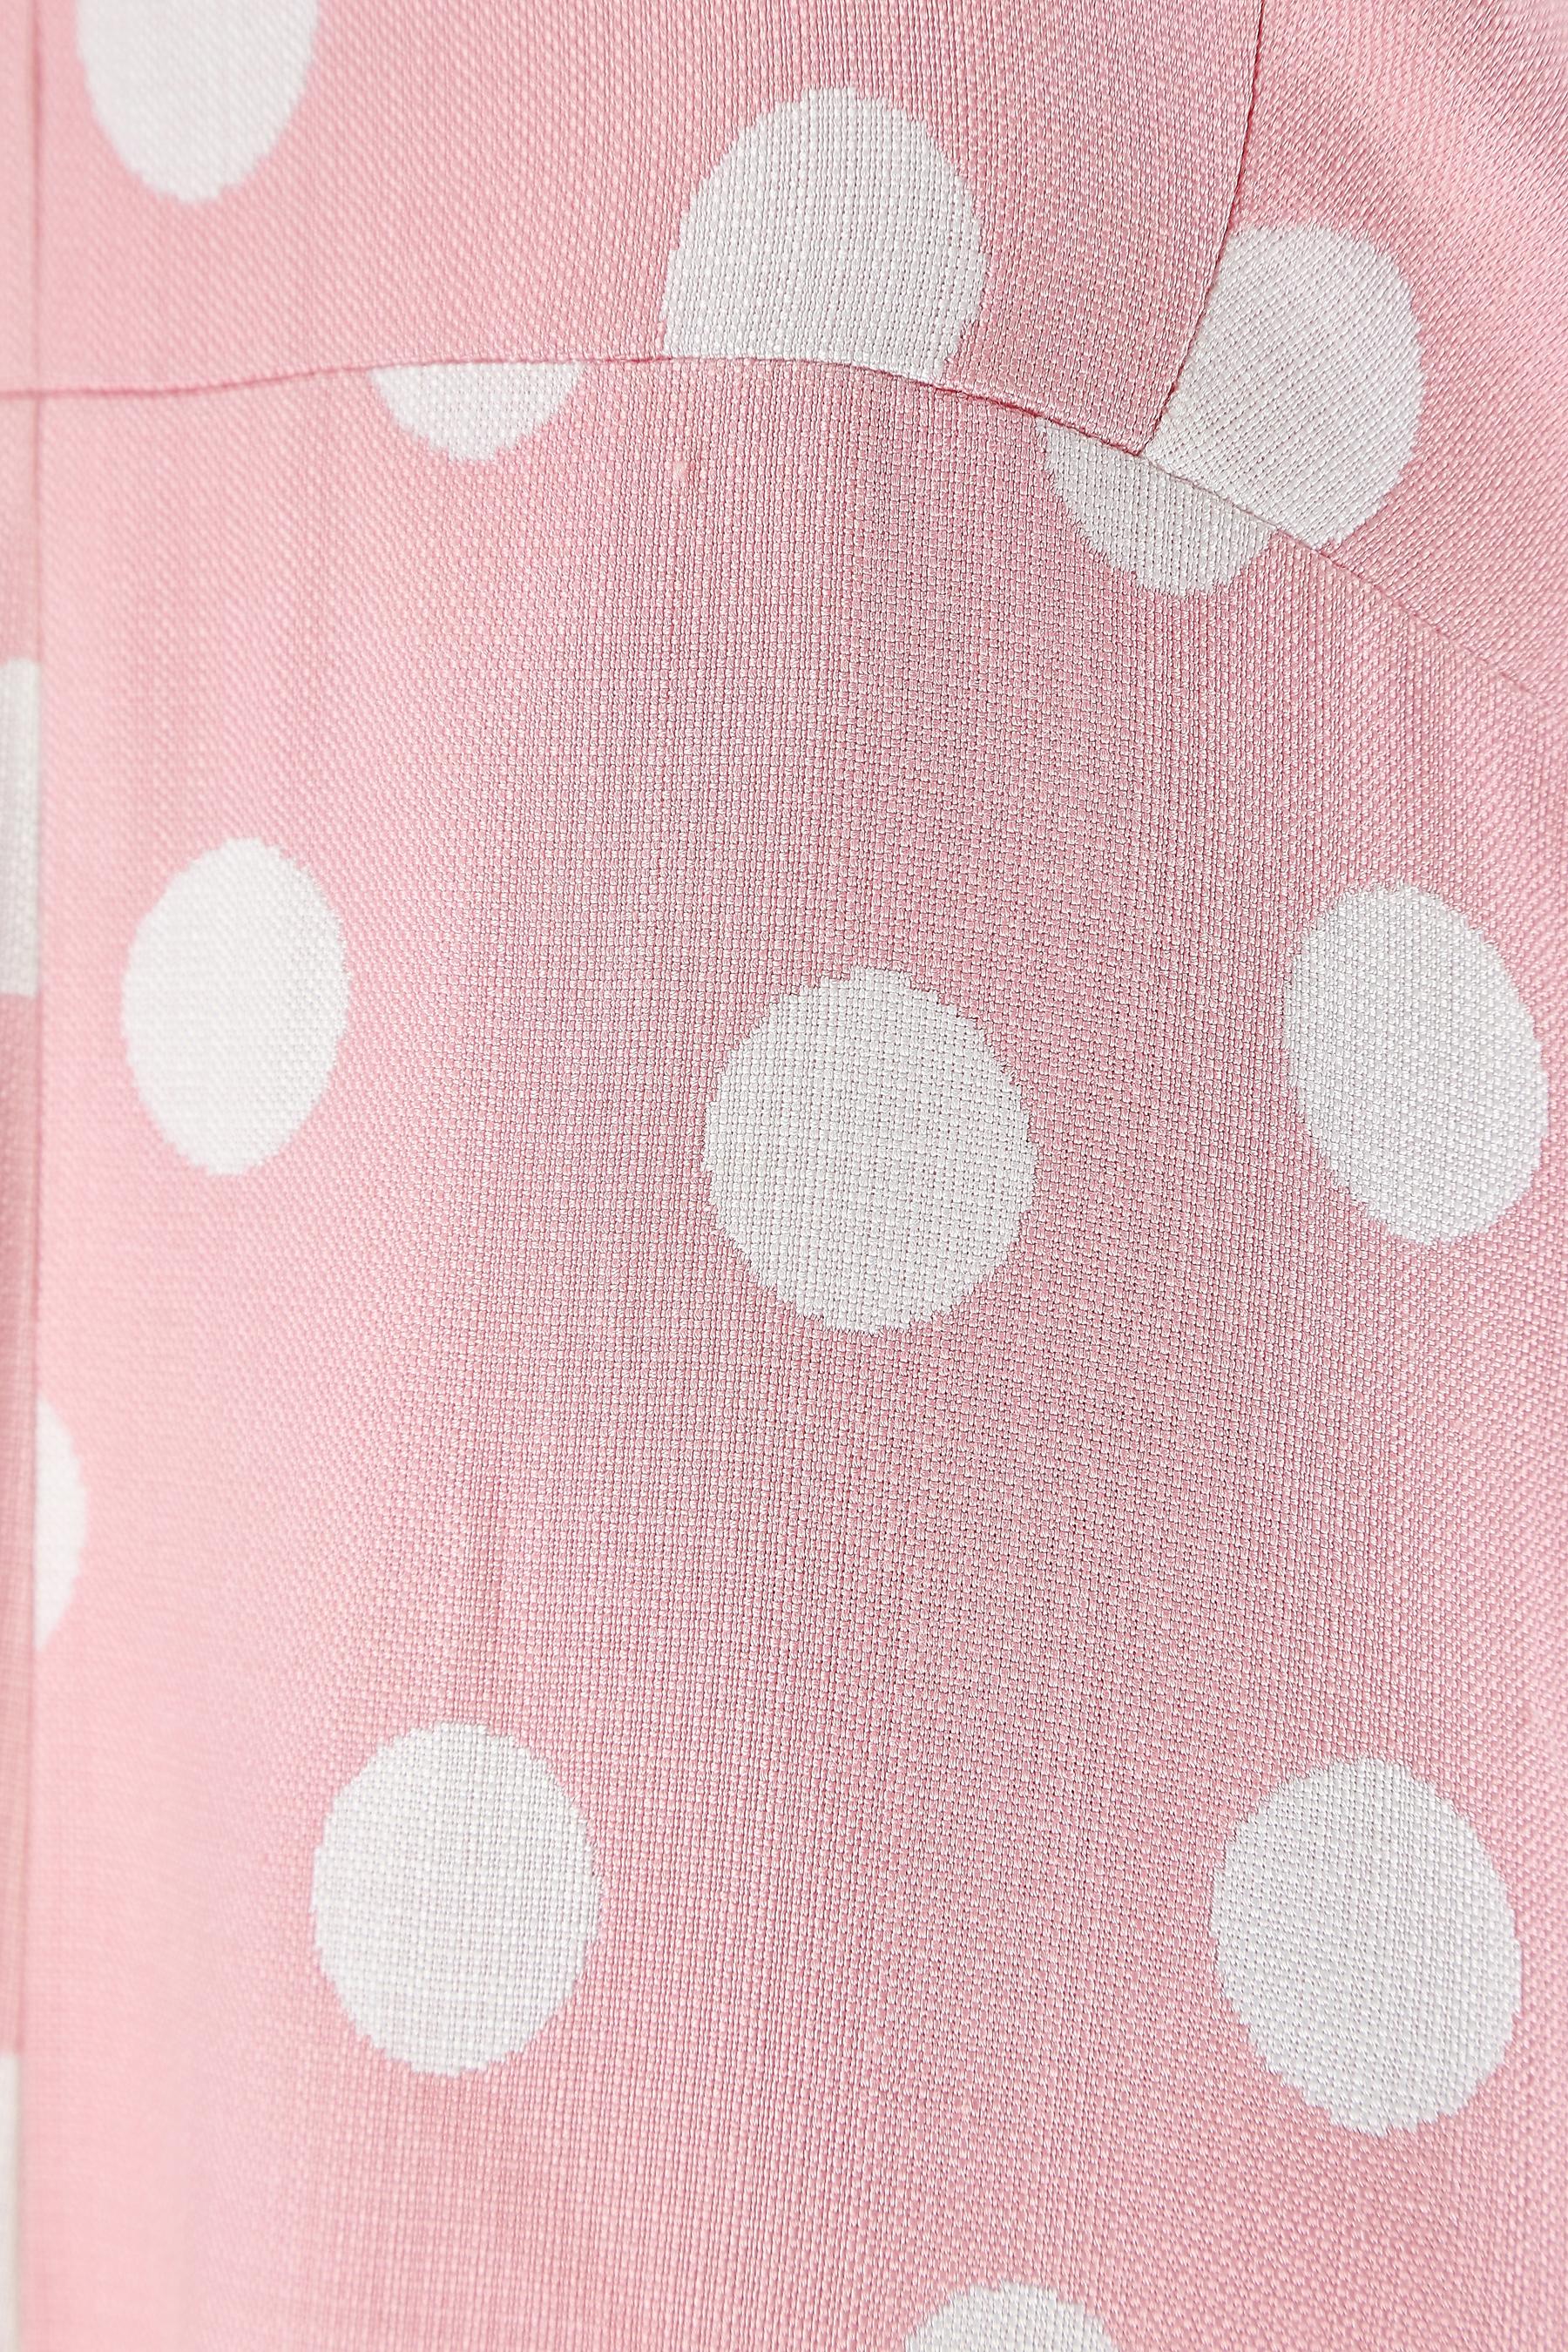 Women's 1970s Christian Dior Couture Pink Polka Dot Halter Neck Dress